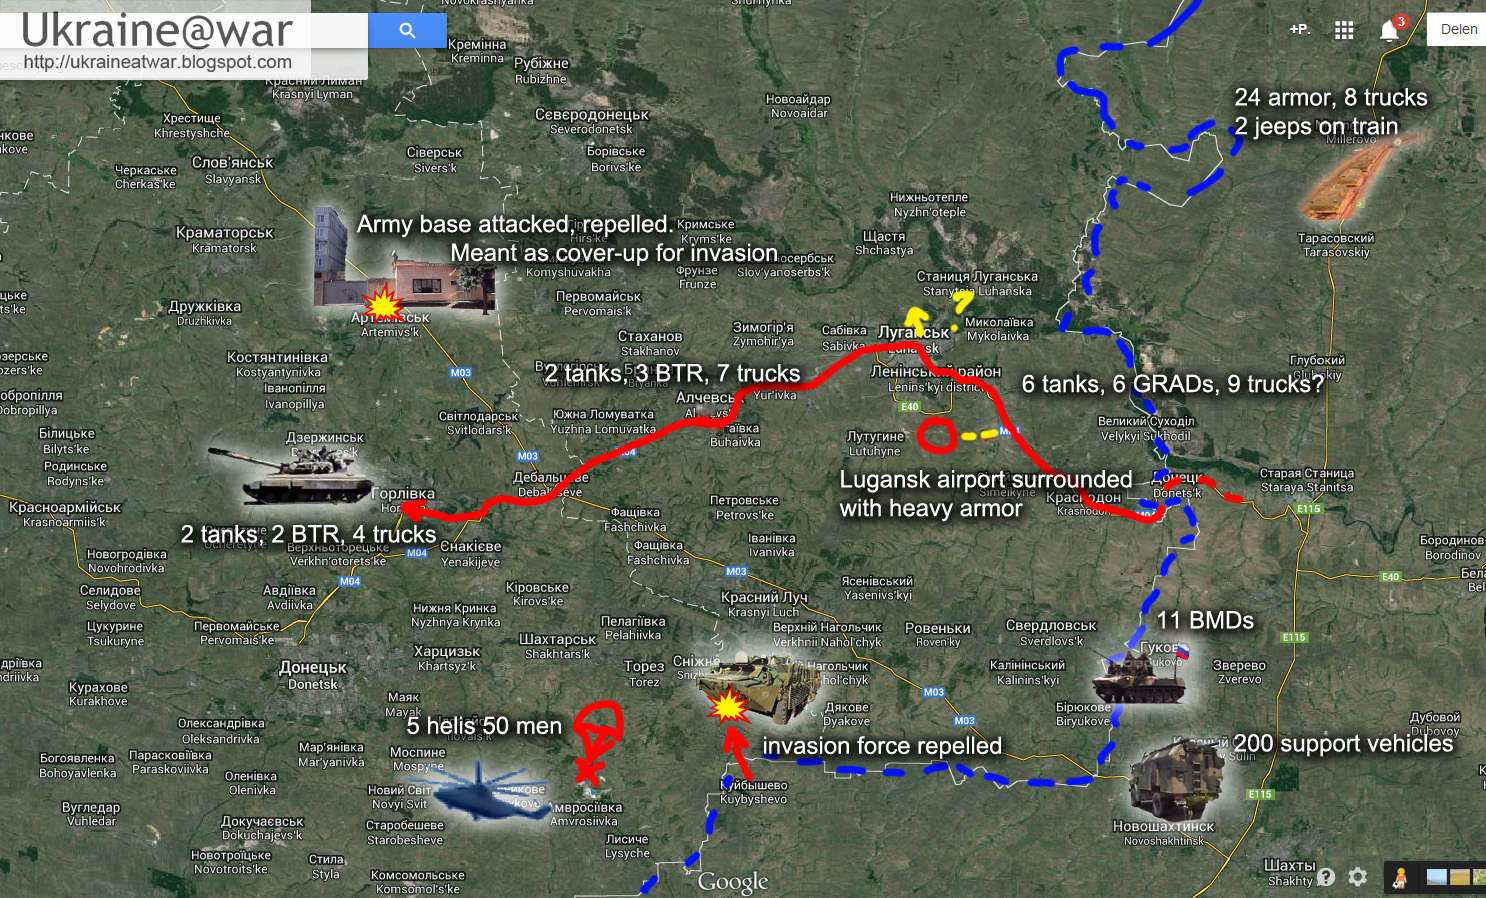 Putin@war: Open Russian invasion into Ukraine has begun